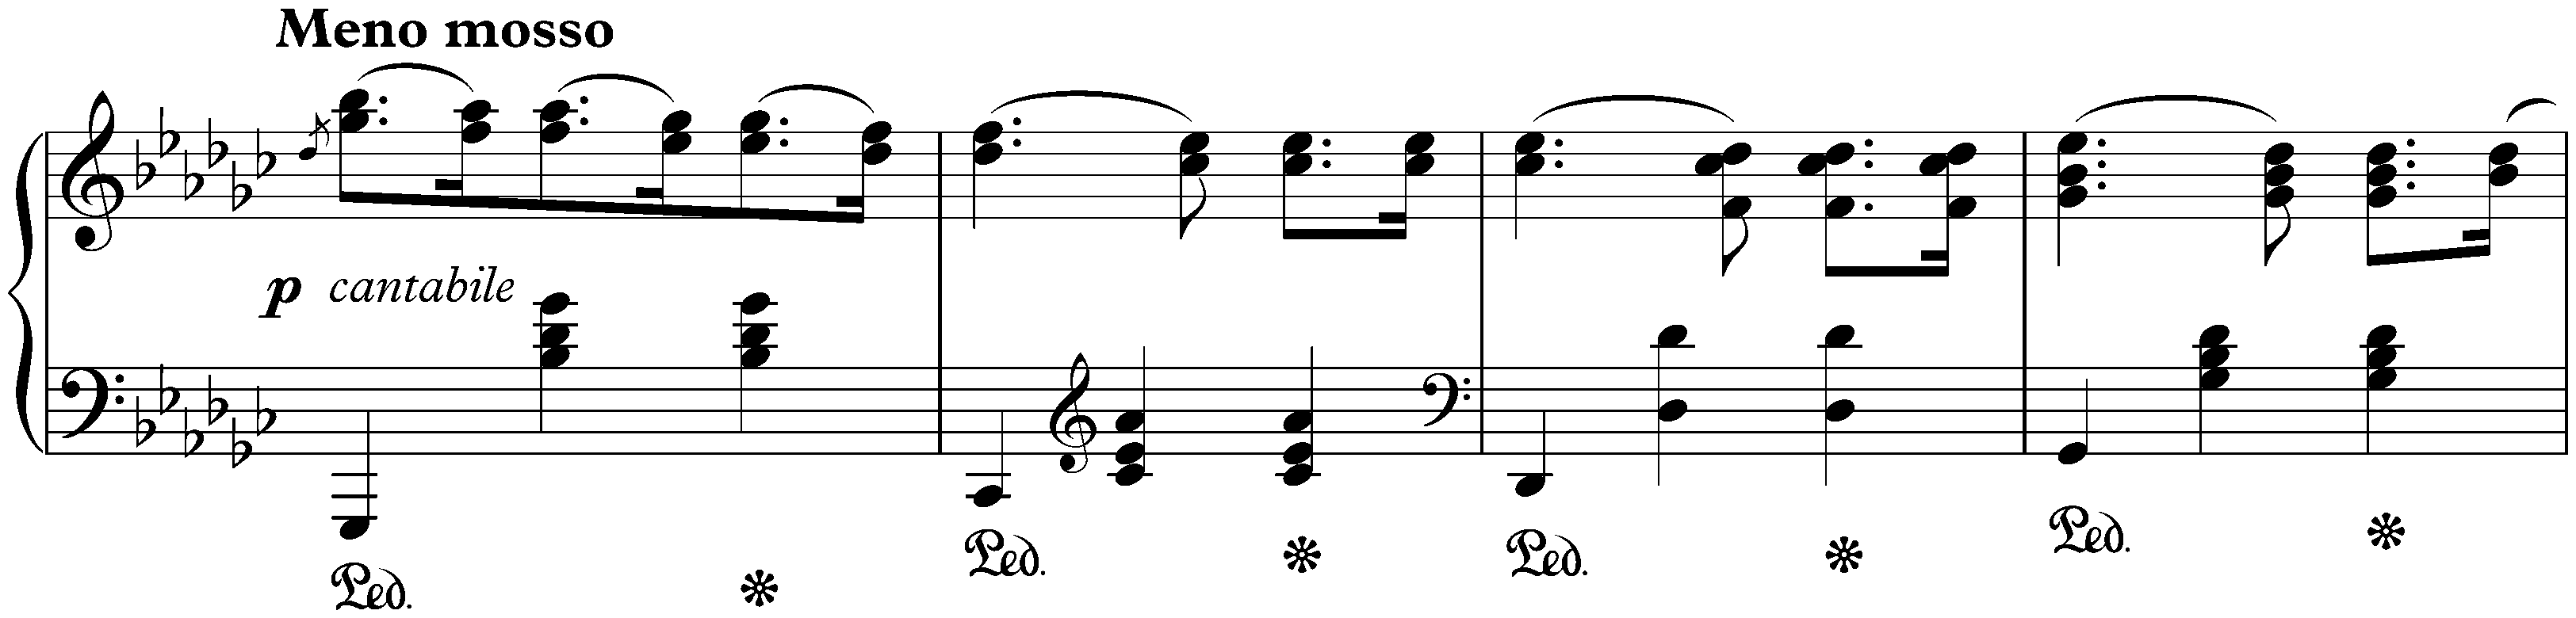 Three Valses, op. 70; 1. G-flat major